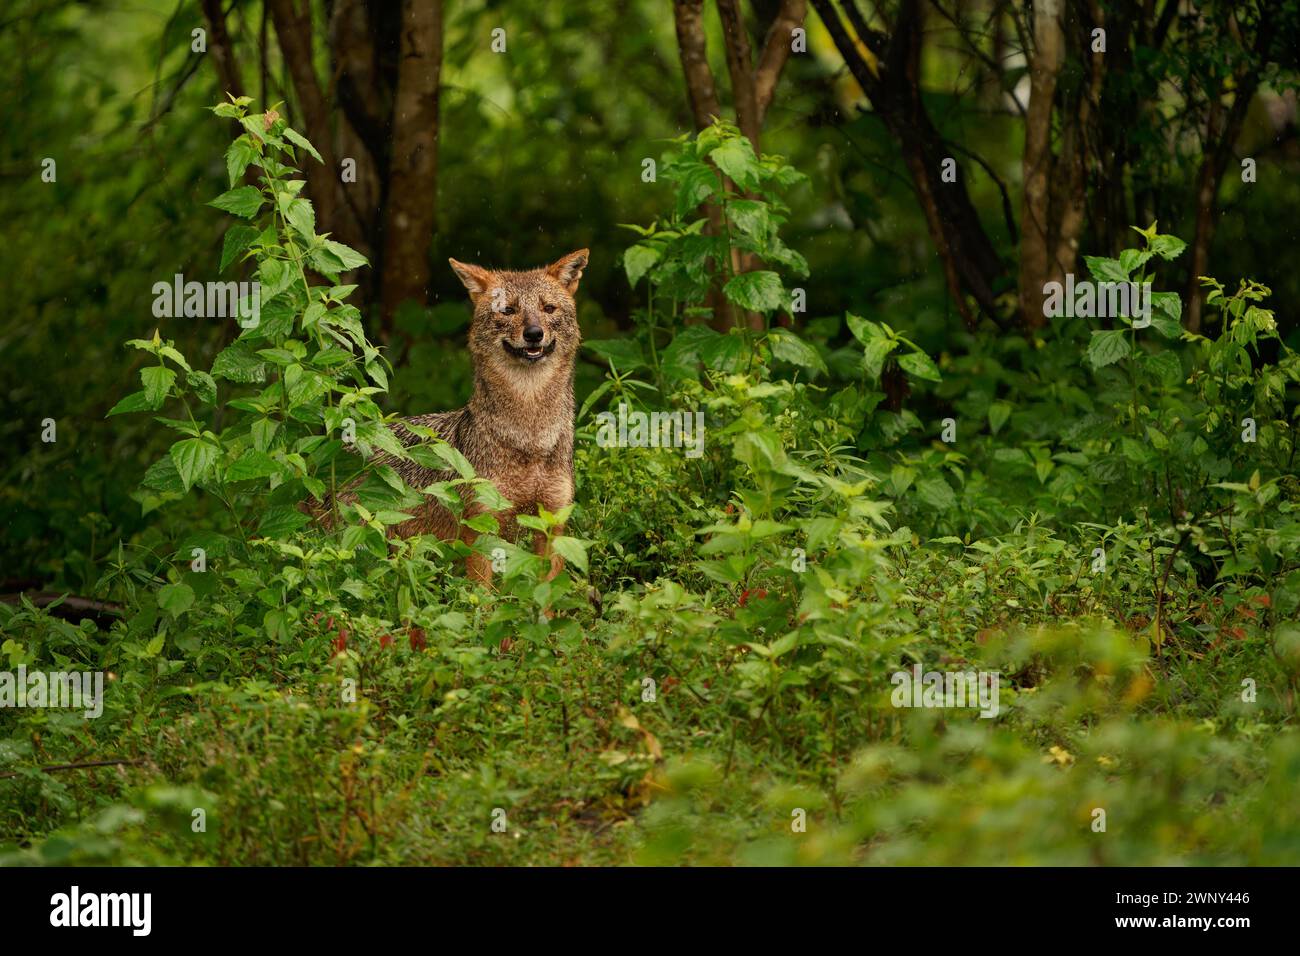 Golden Sri Lankan or Southern Indian Jackal - Canis aureus naria, subspecies of golden jackal native to southern India and Sri Lanka,  wolf-like canid Stock Photo